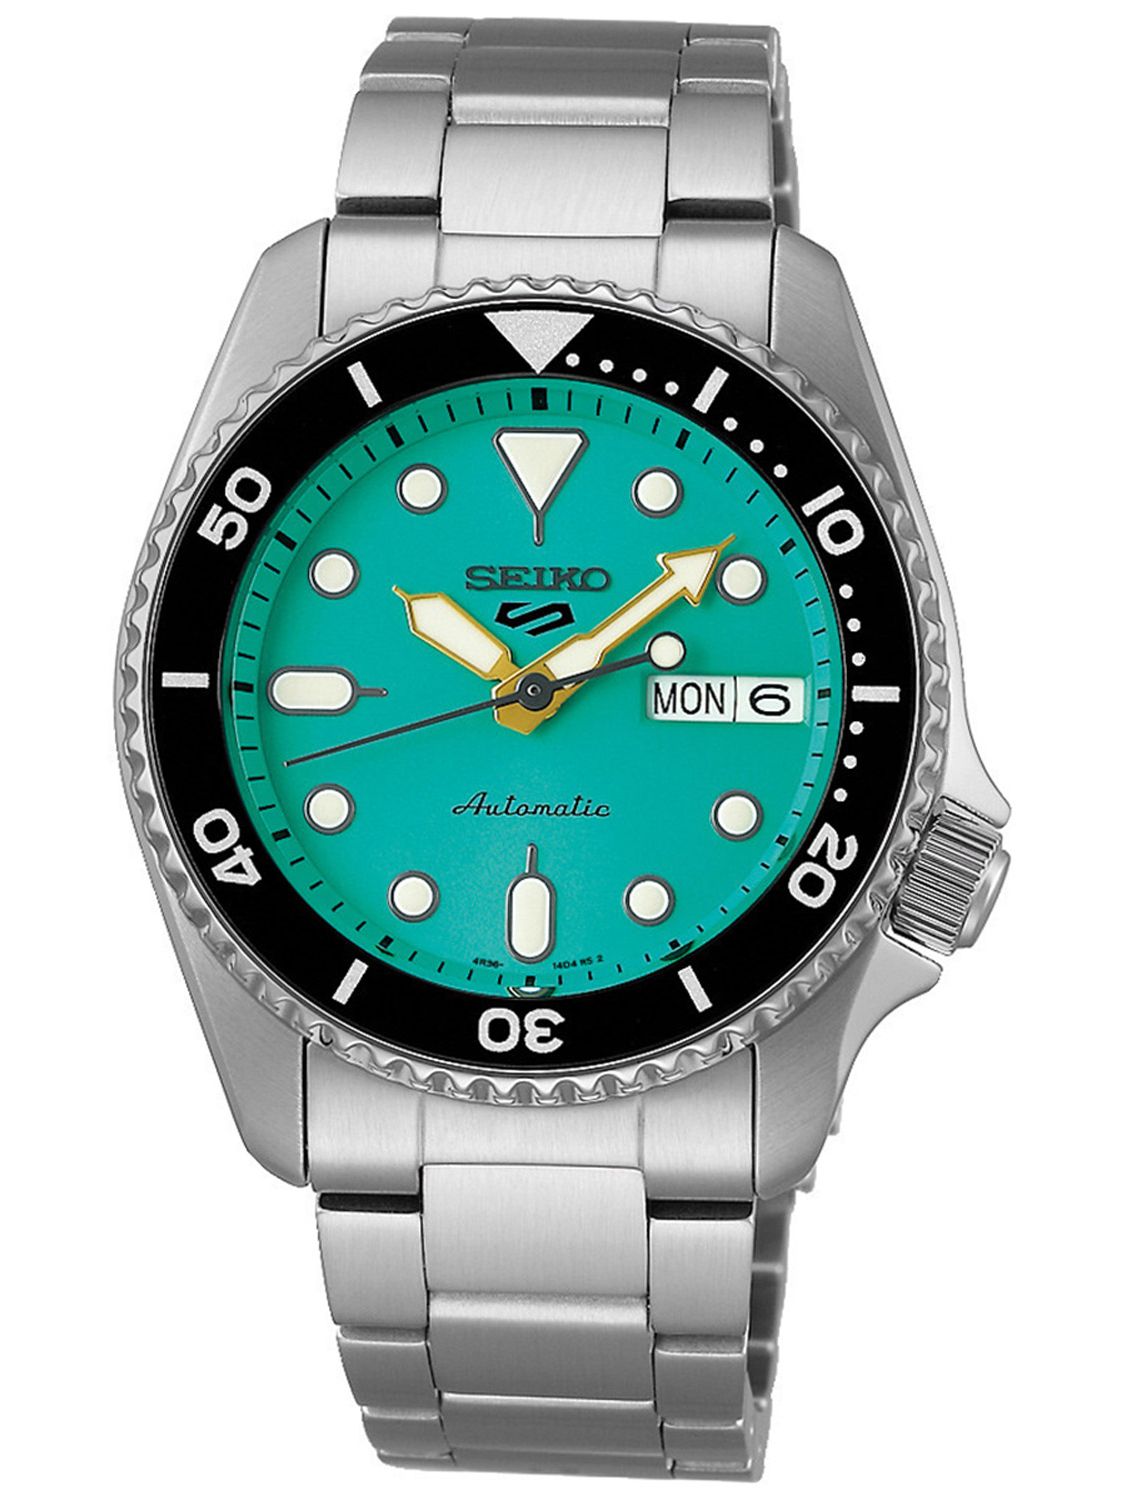 Steel/Turquoise Watch Seiko SRPK33K1 • Automatic Sports 5 uhrcenter Unisex